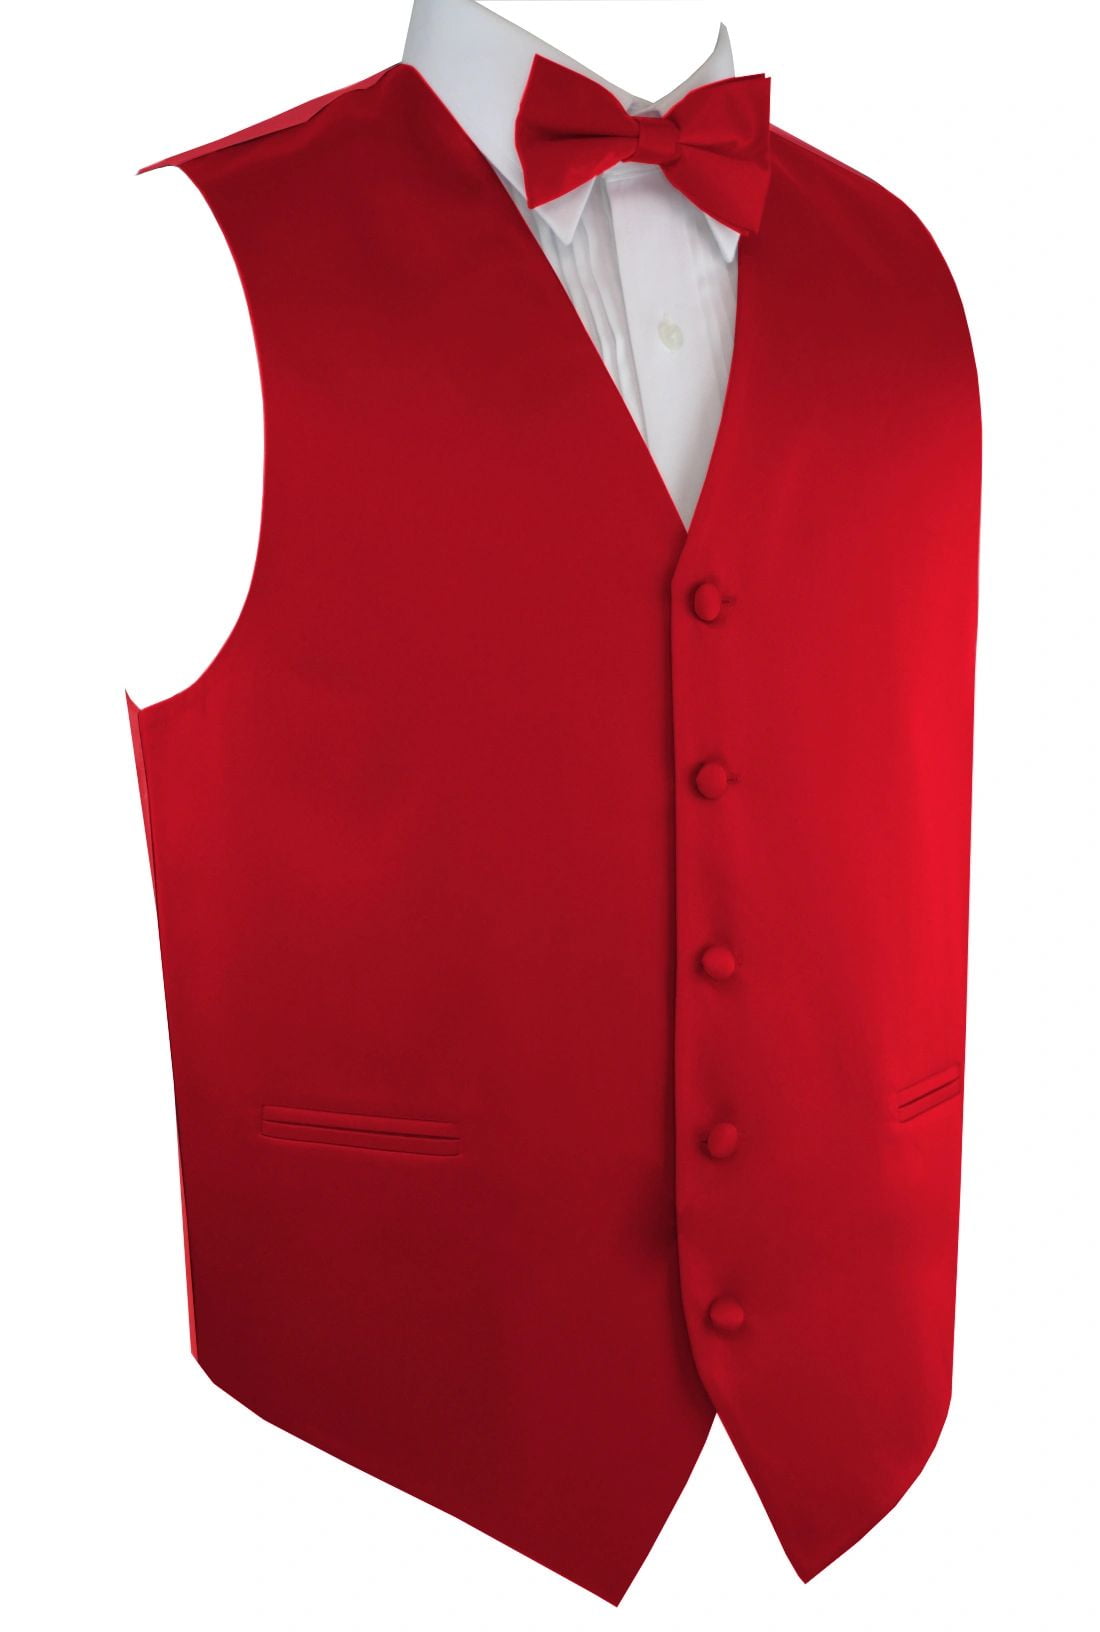 New Men's Red formal vest Tuxedo Waistcoat_bowtie & hankie set wedding prom 